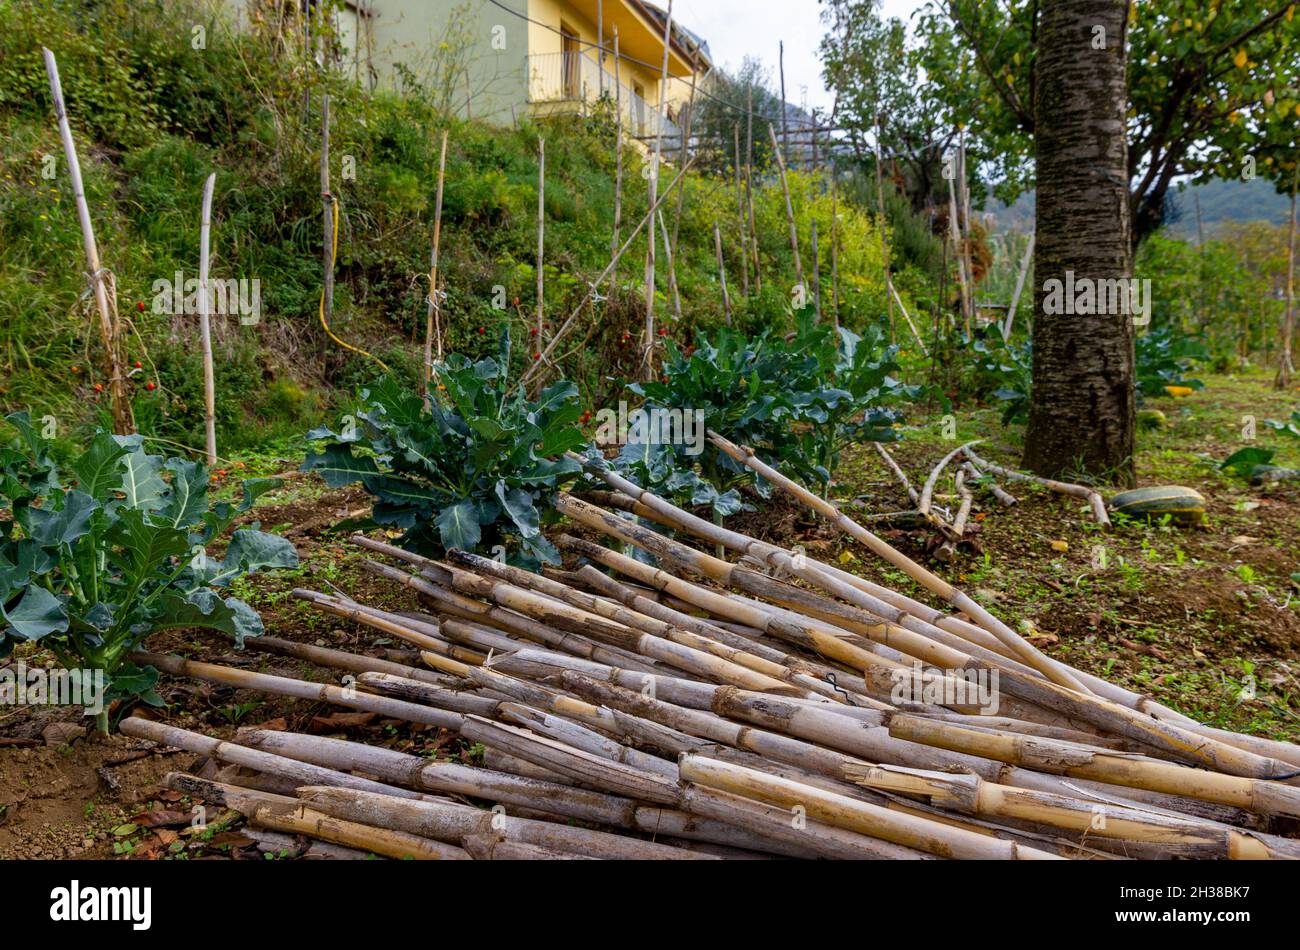 Italian farm cane stalks Arundo donax Stock Photo